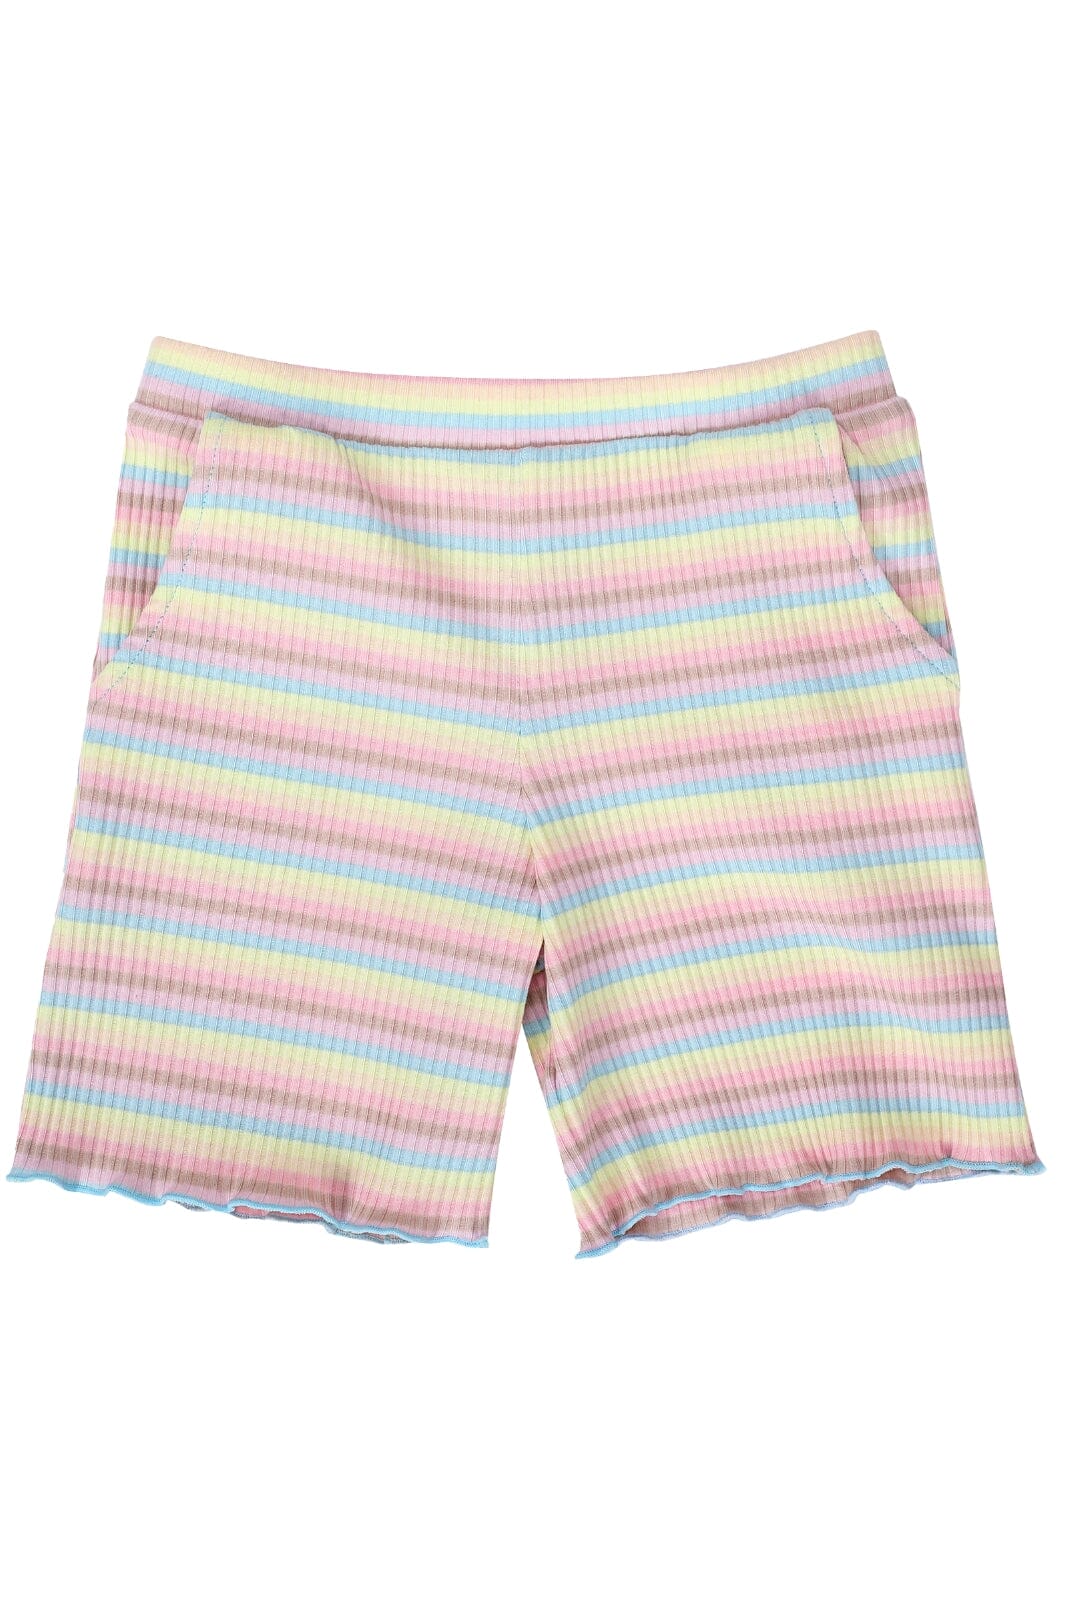 Liberte Ami - Natalia-Shorts-Kids - Dusty Multicolor Stripe Shorts 